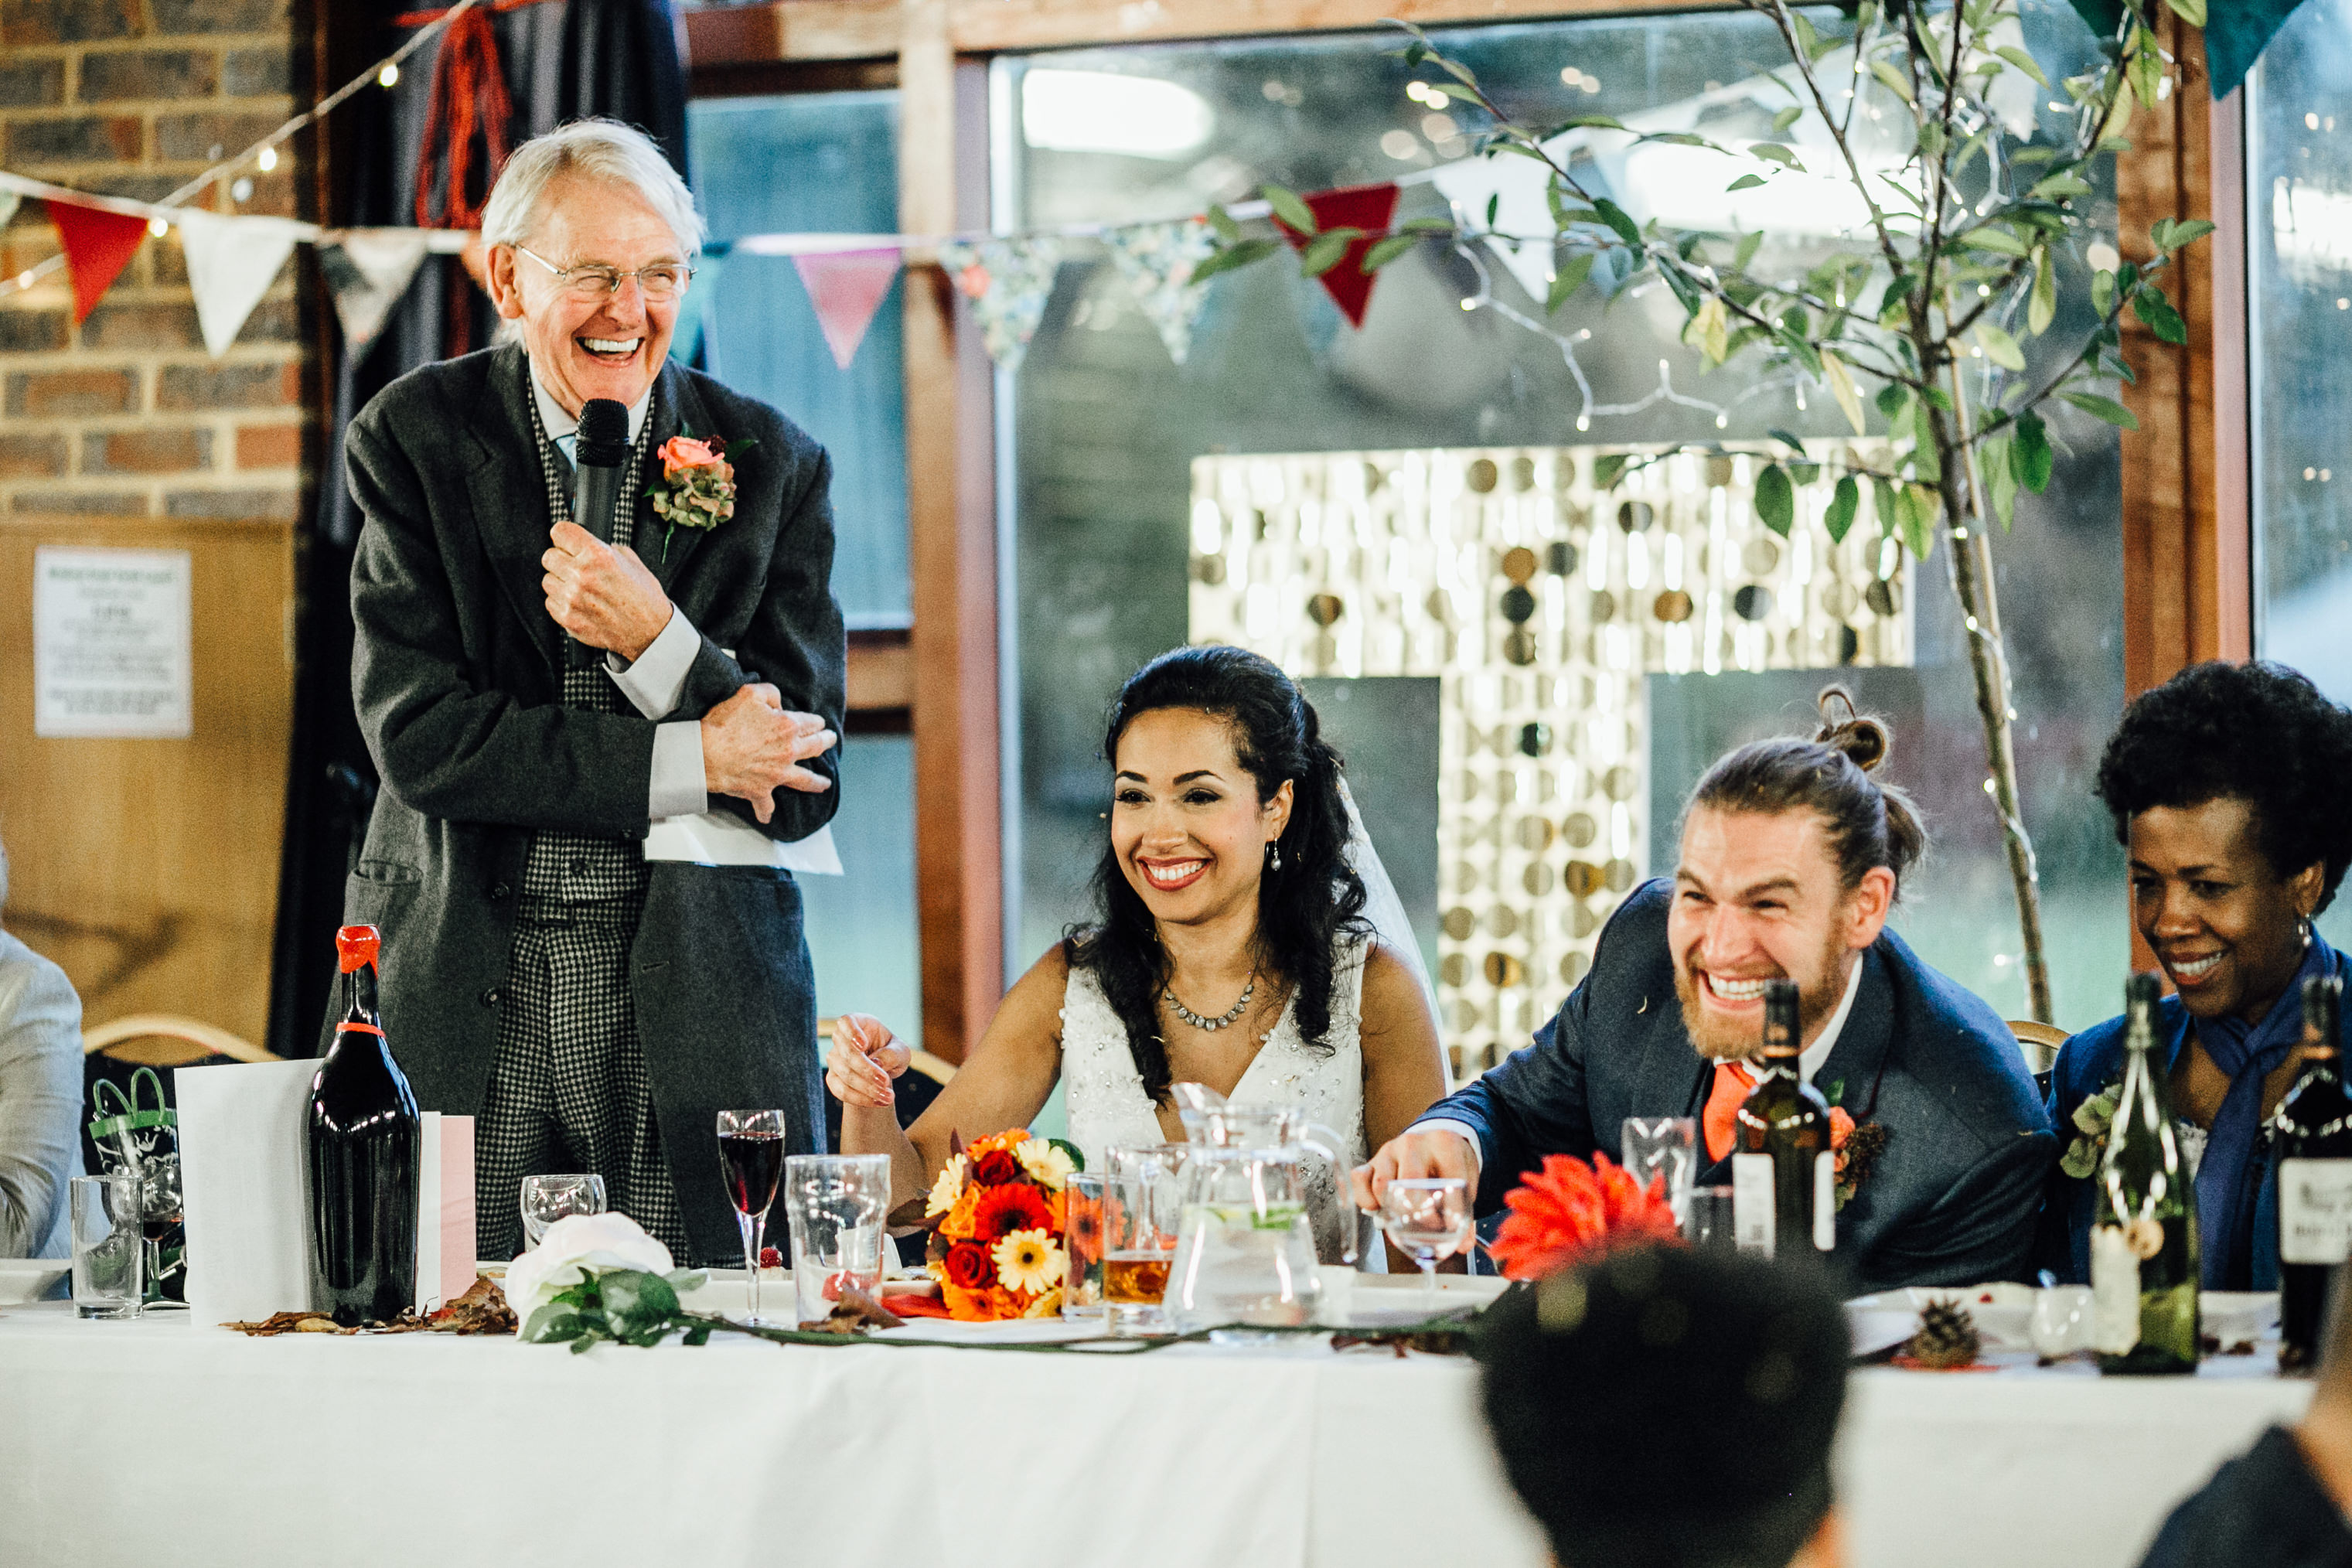 quirky fun autumn wedding in london wedding photographer documentary style speeches